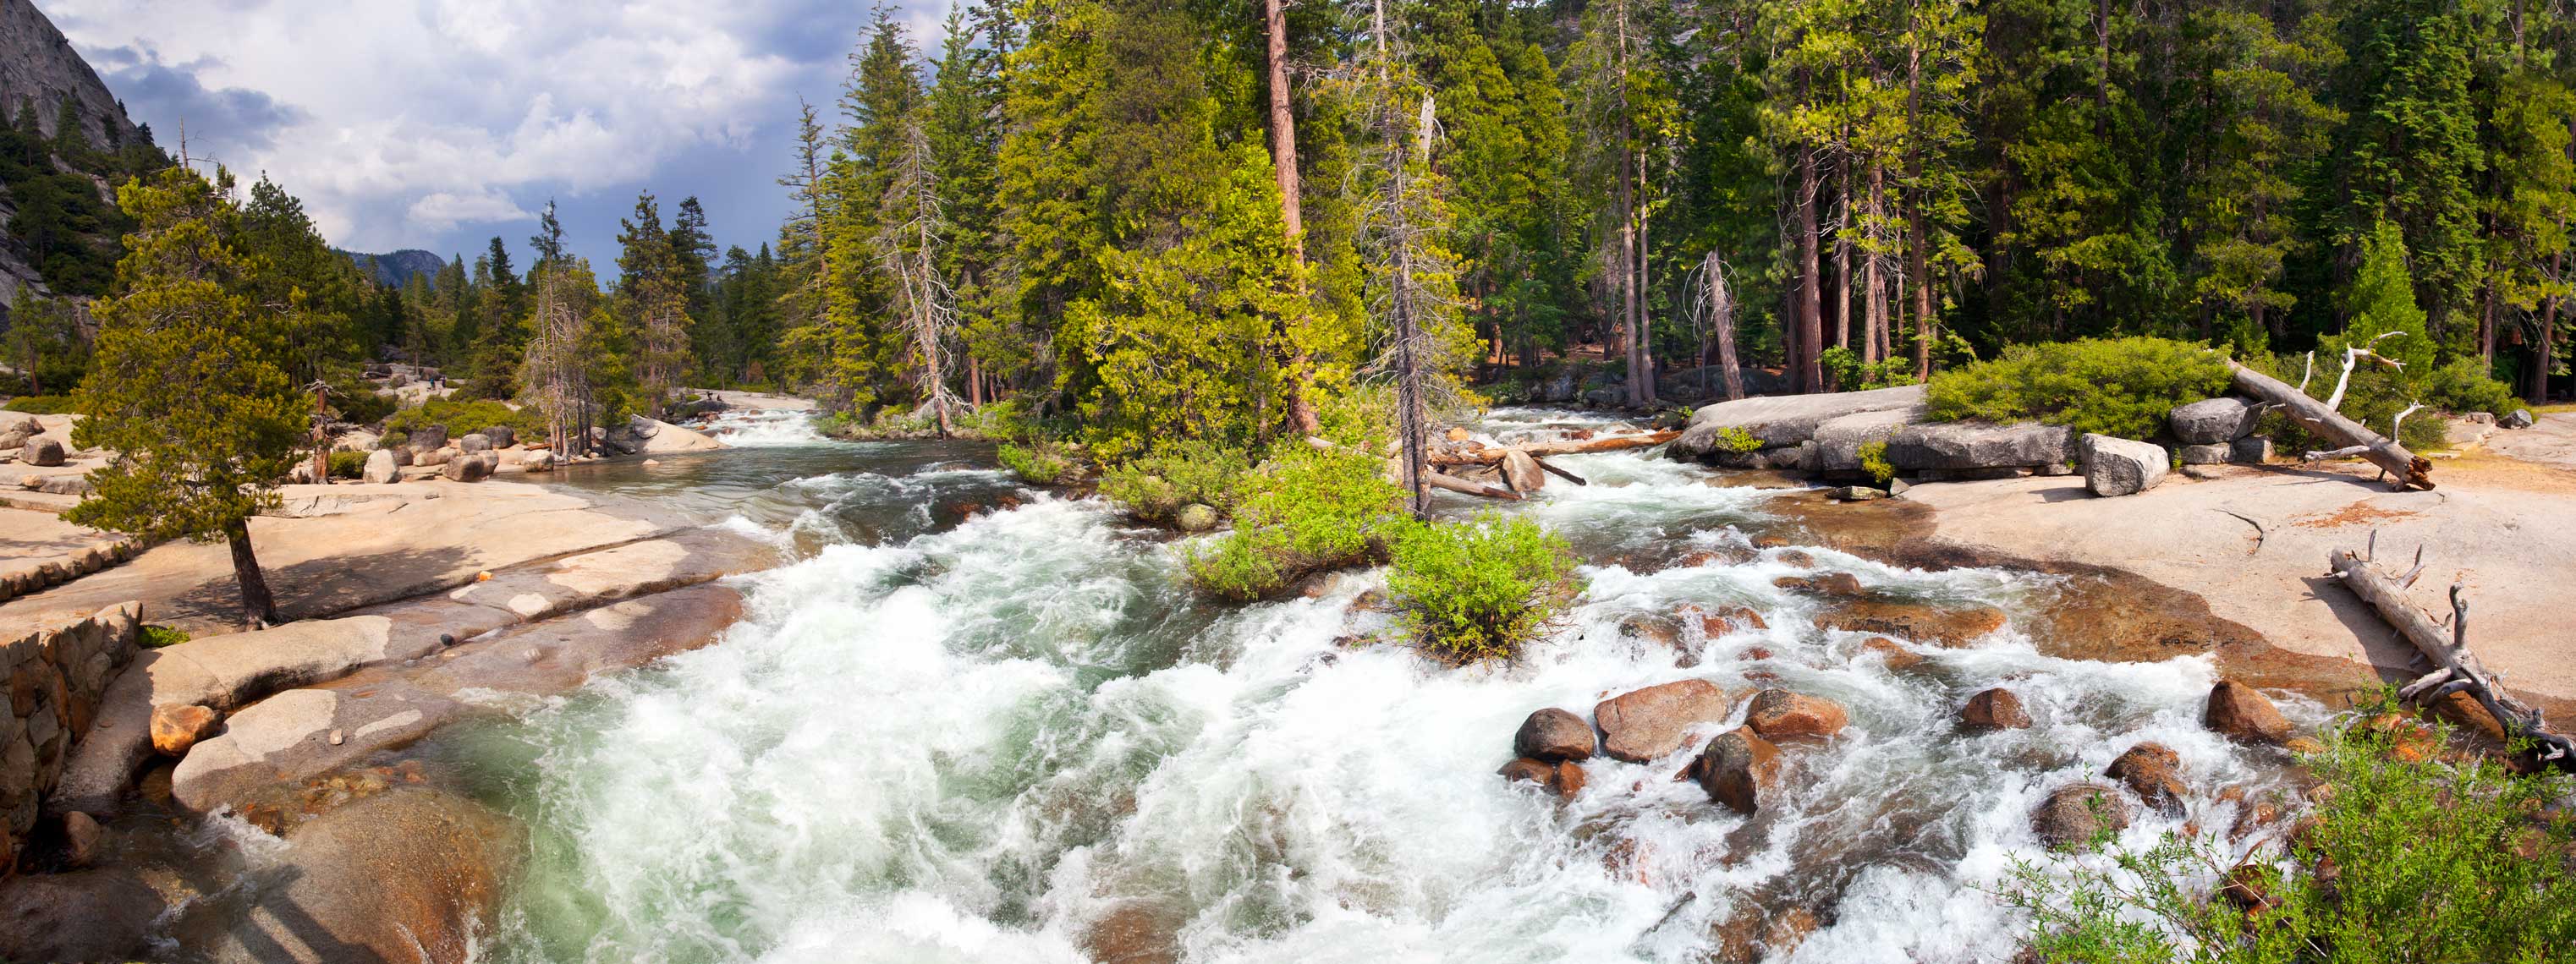 Yosemite - Merced river